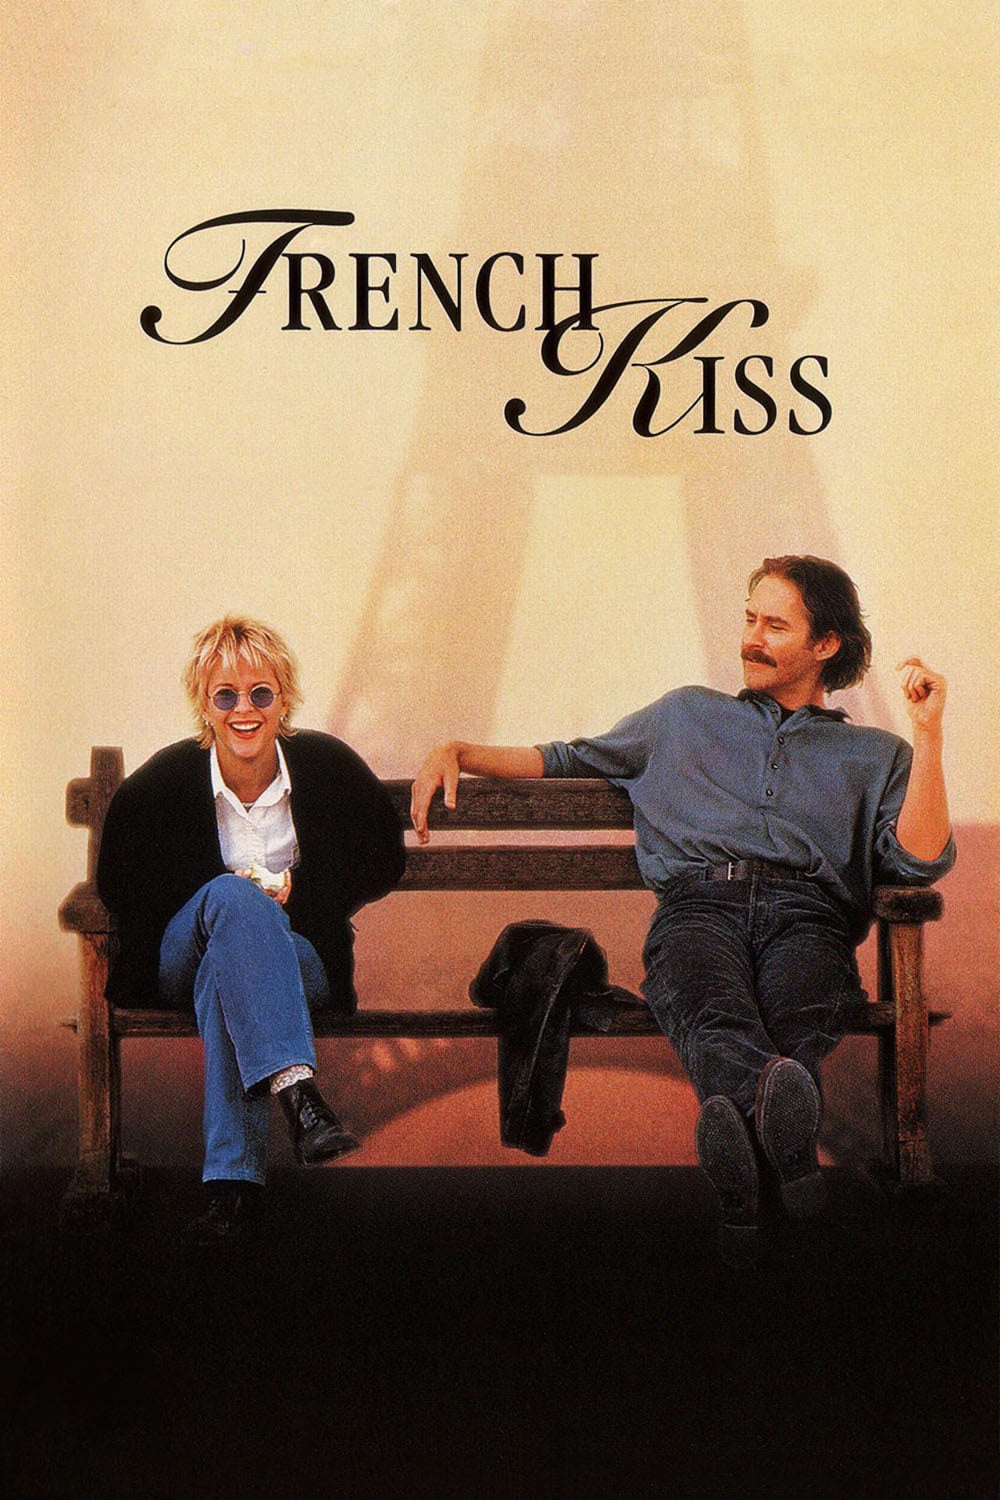 Affiche du film "French Kiss"